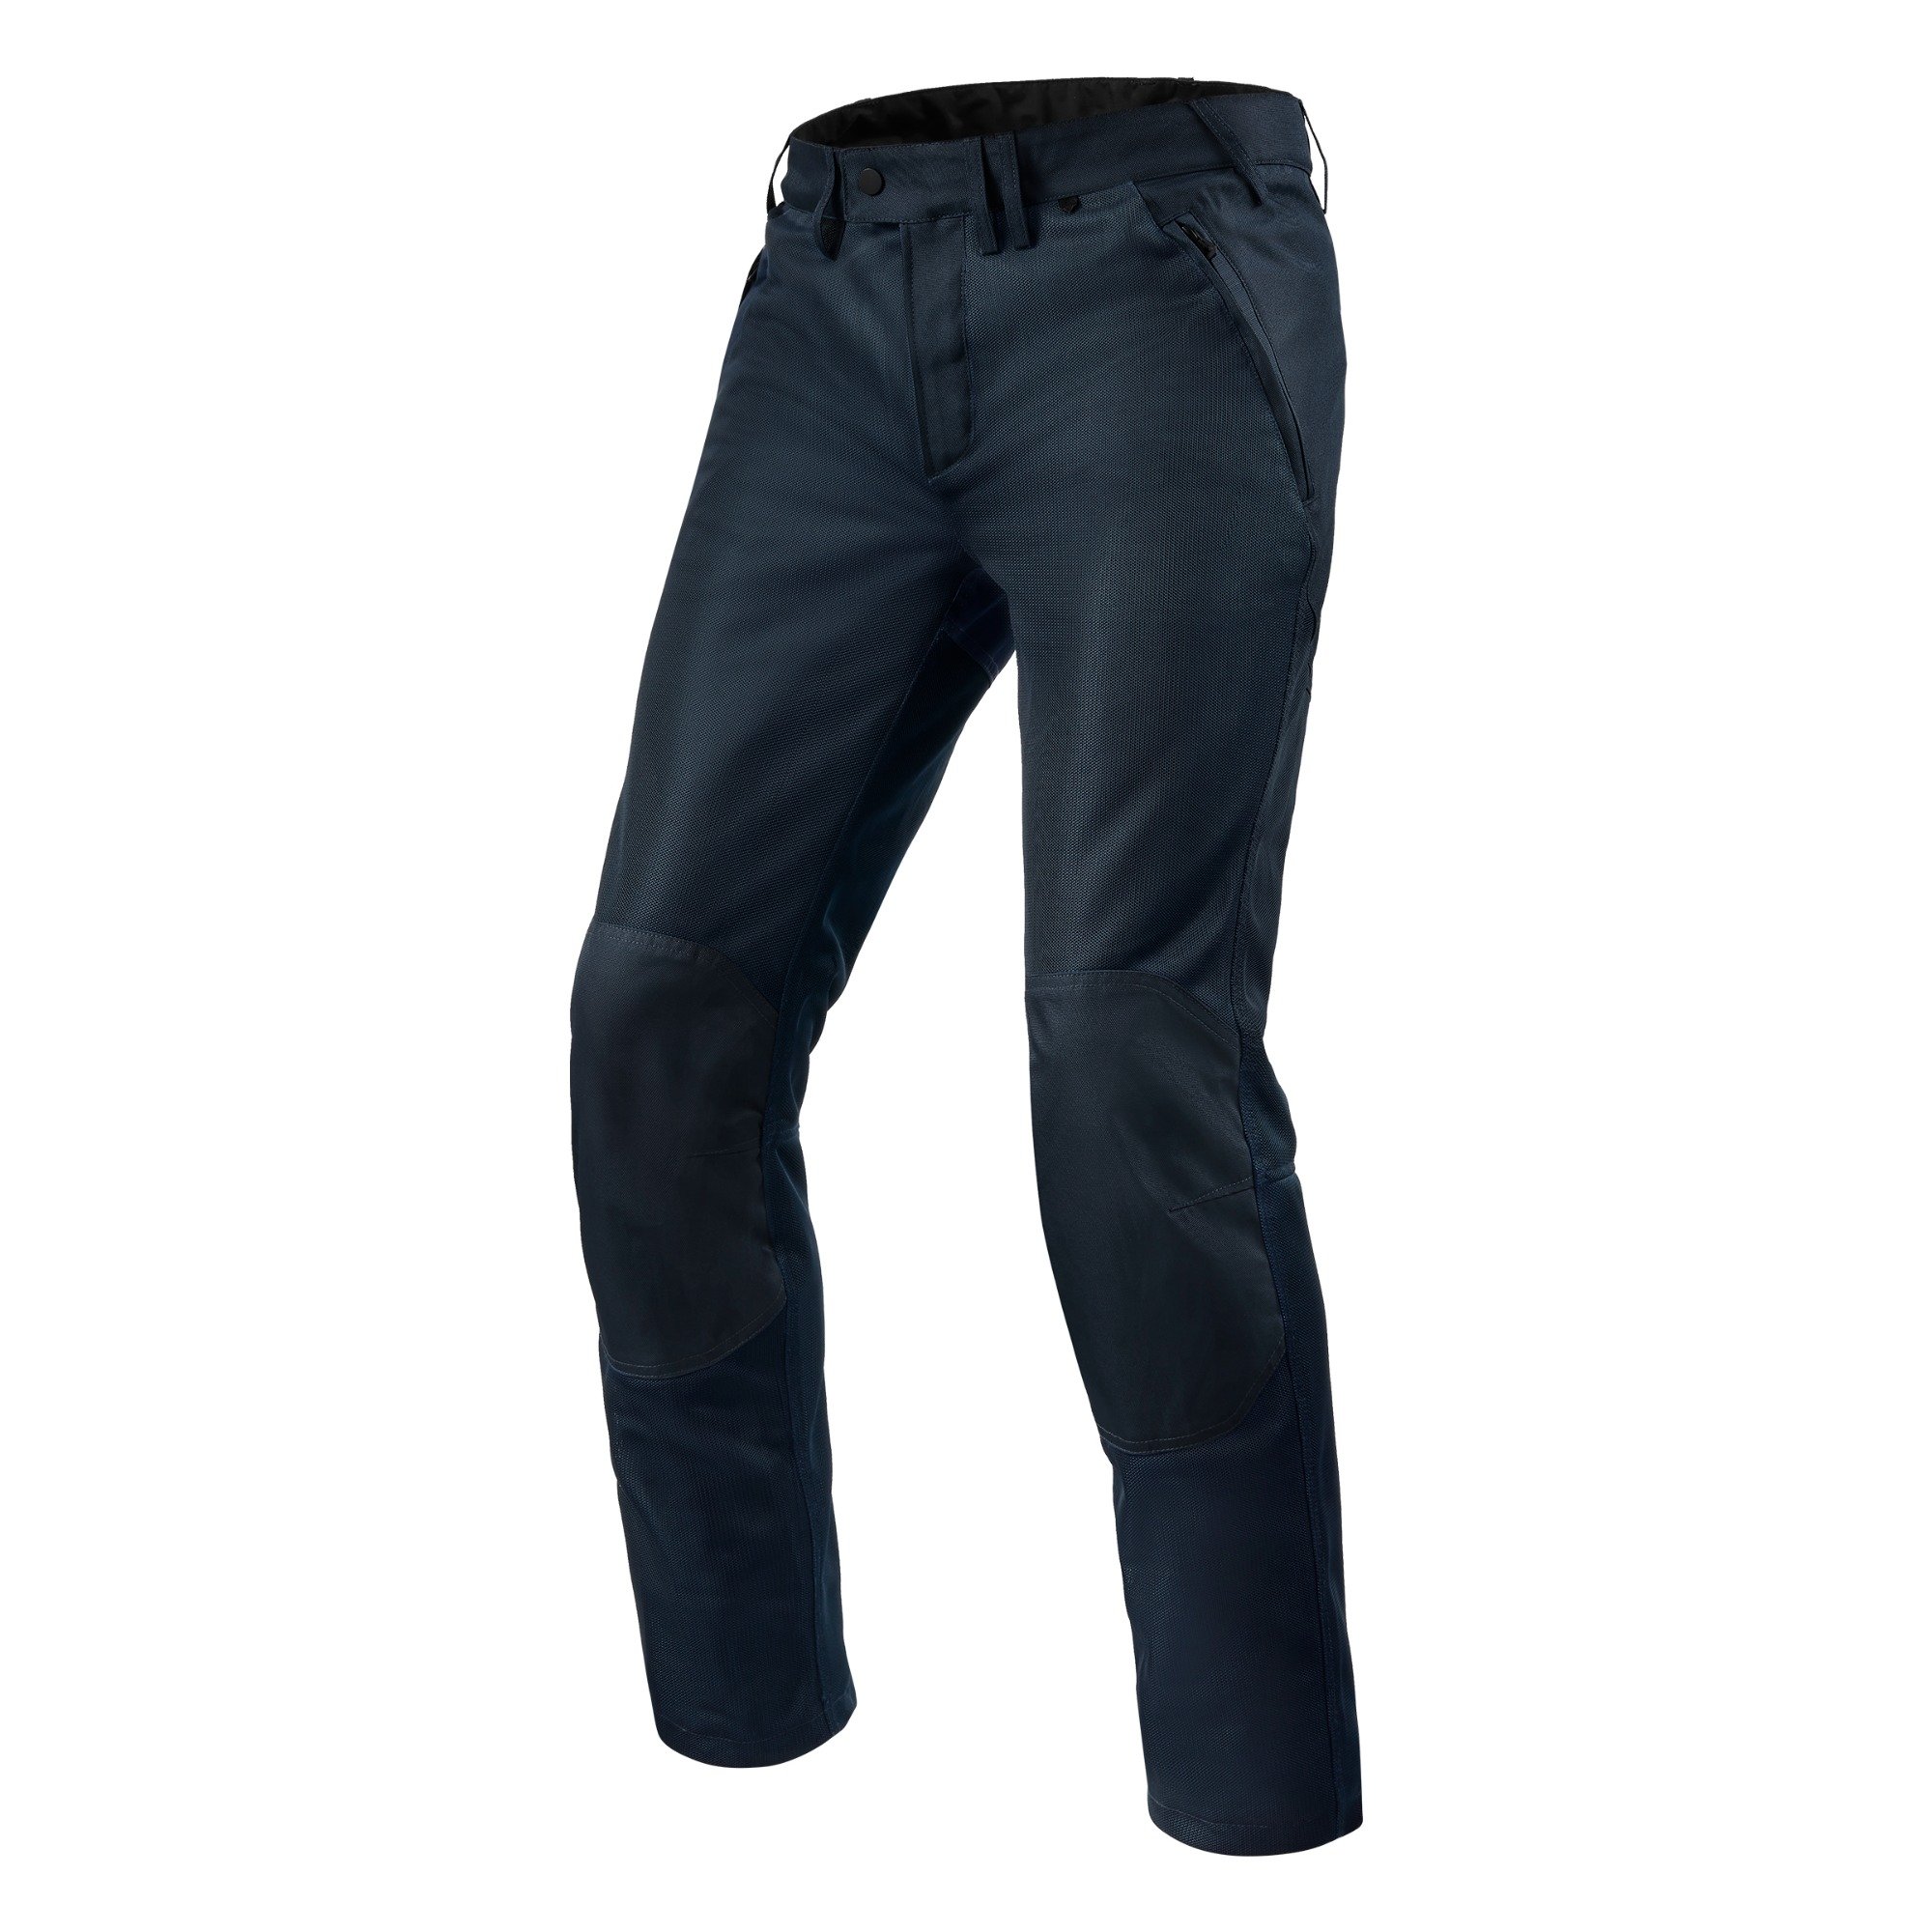 Image of REV'IT! Pants Eclipse 2 Dark Blue Long Motorcycle Pants Size M ID 8700001369077